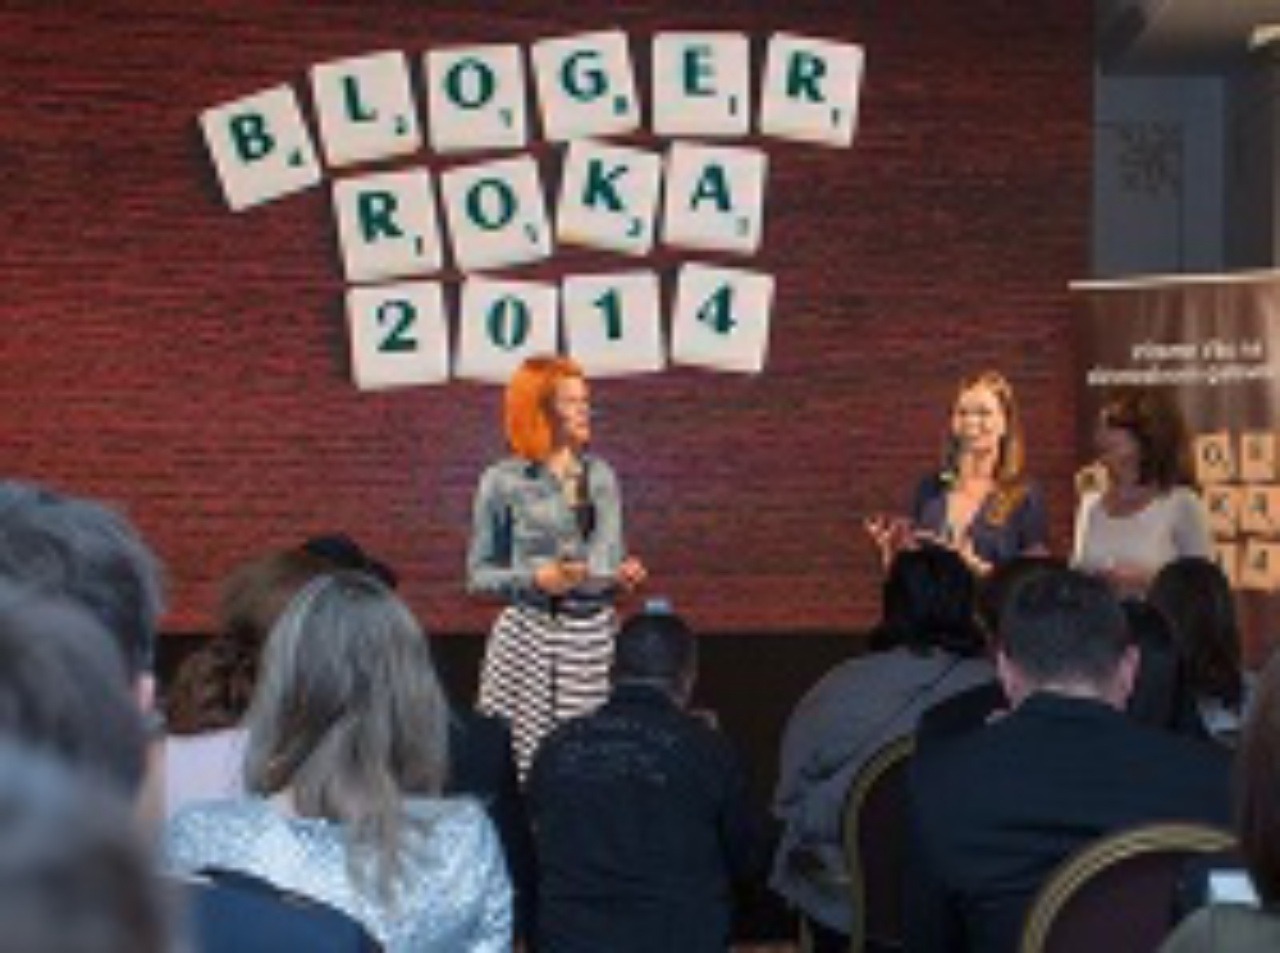 Bloger roka 2014